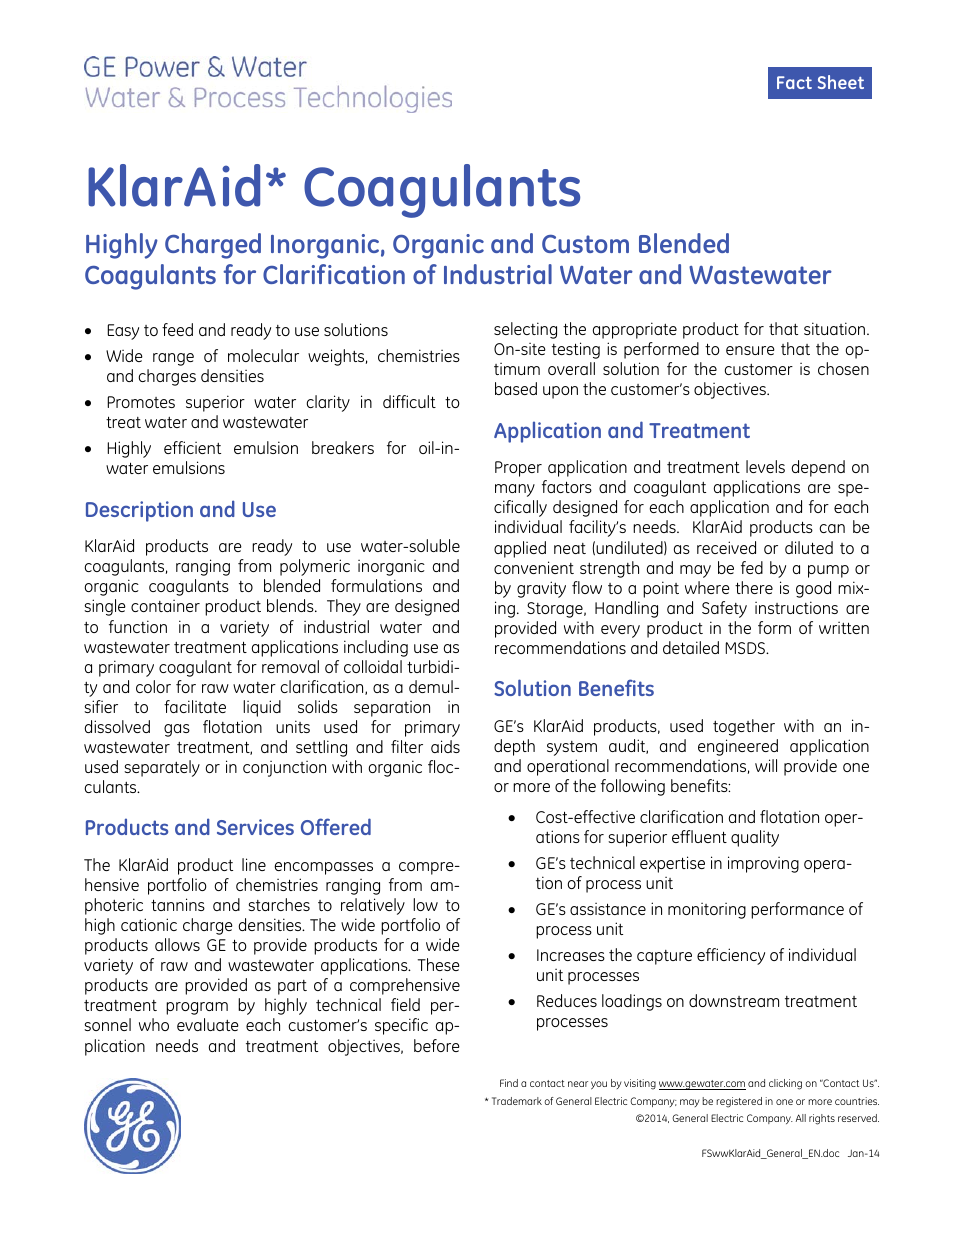 Emulsion Breakers - KlarAid Coagulants